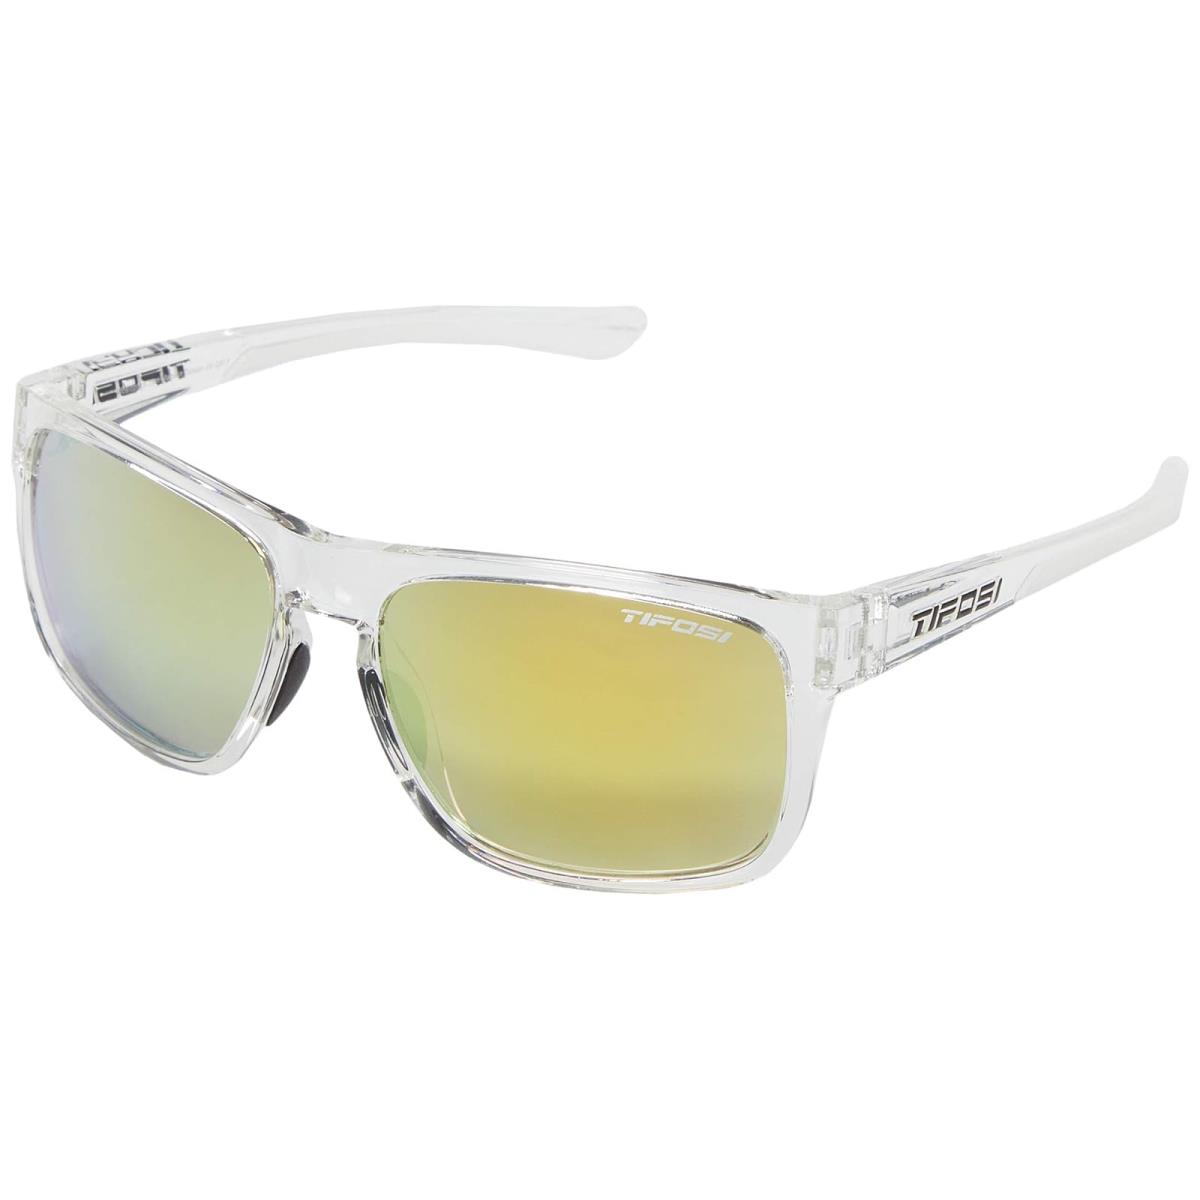 Unisex Sunglasses Tifosi Optics Swick Crystal Clear Frame Smoke Yellow Lens